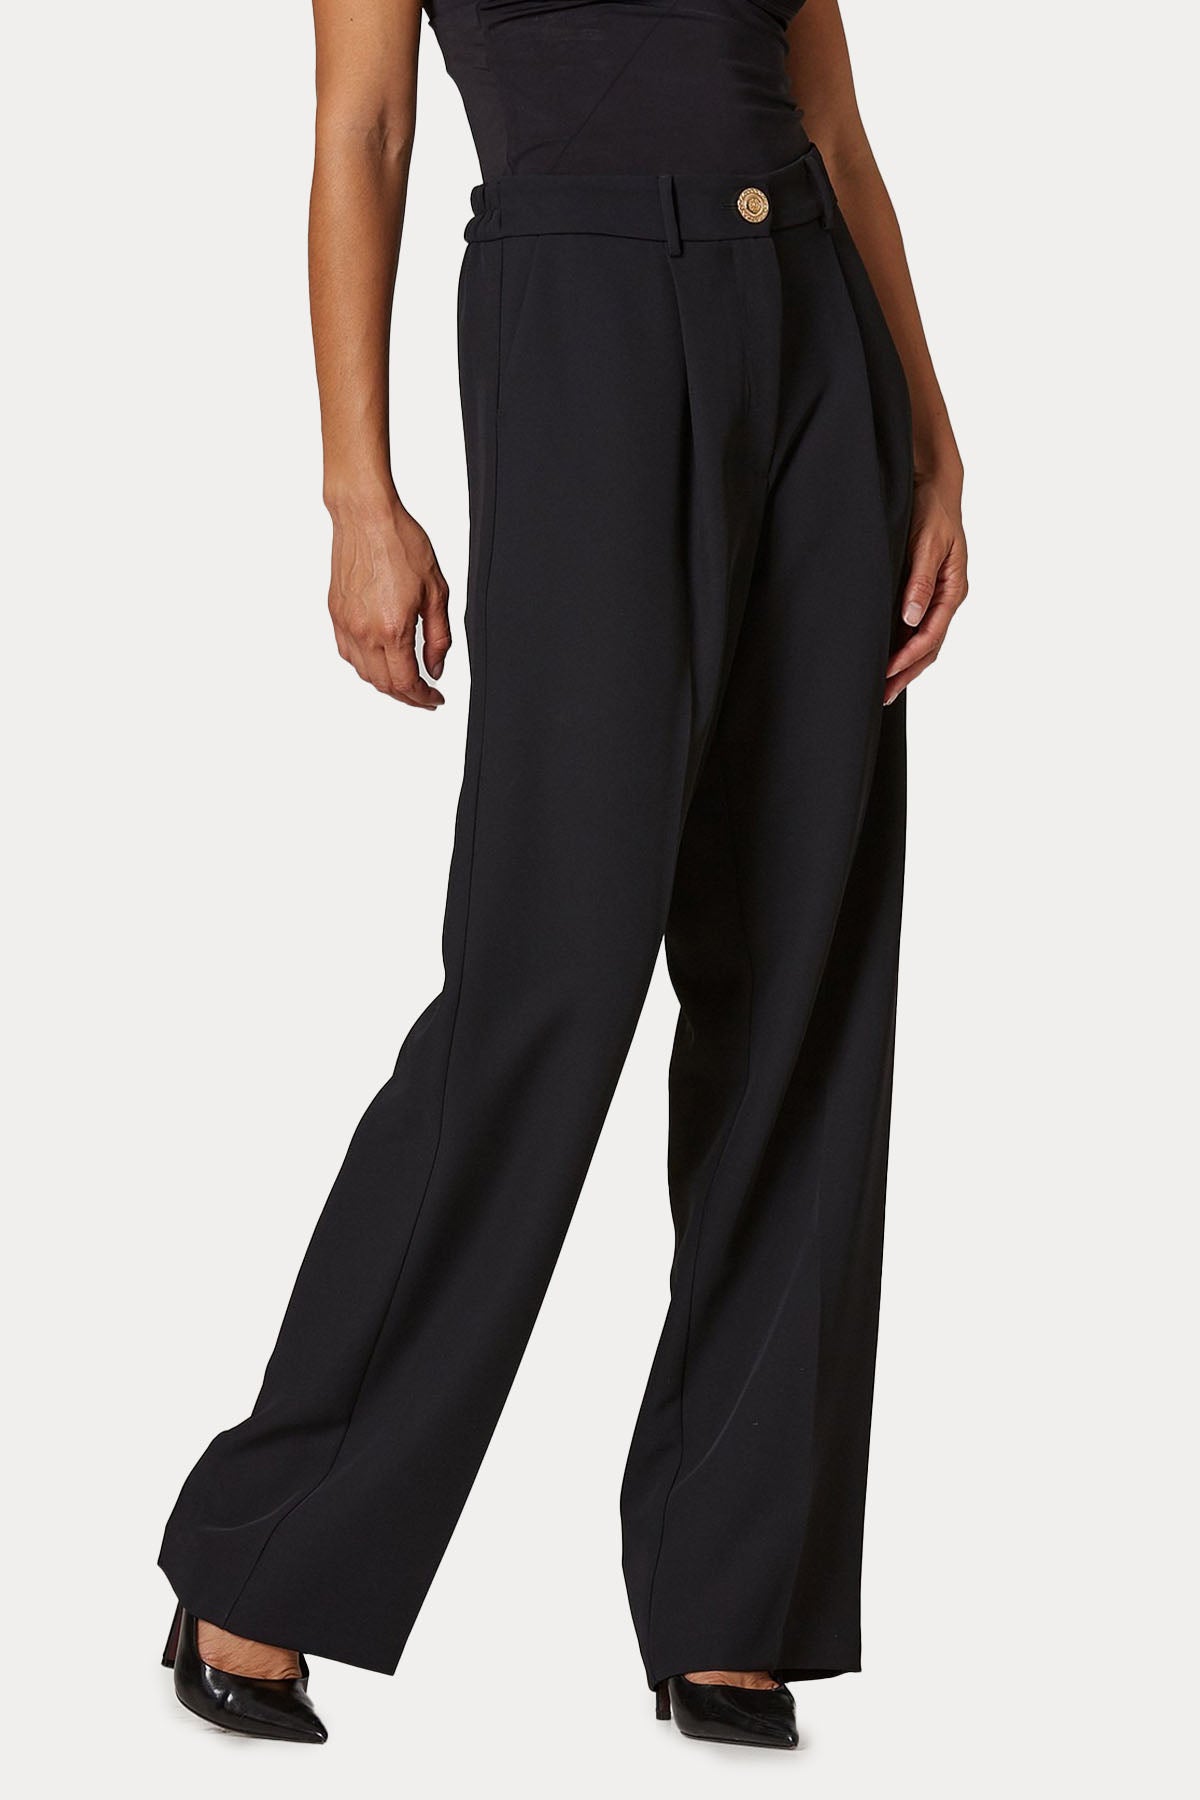 Lynne Loose Fit Yüksek Bel Tek Pile Pantolon-Libas Trendy Fashion Store